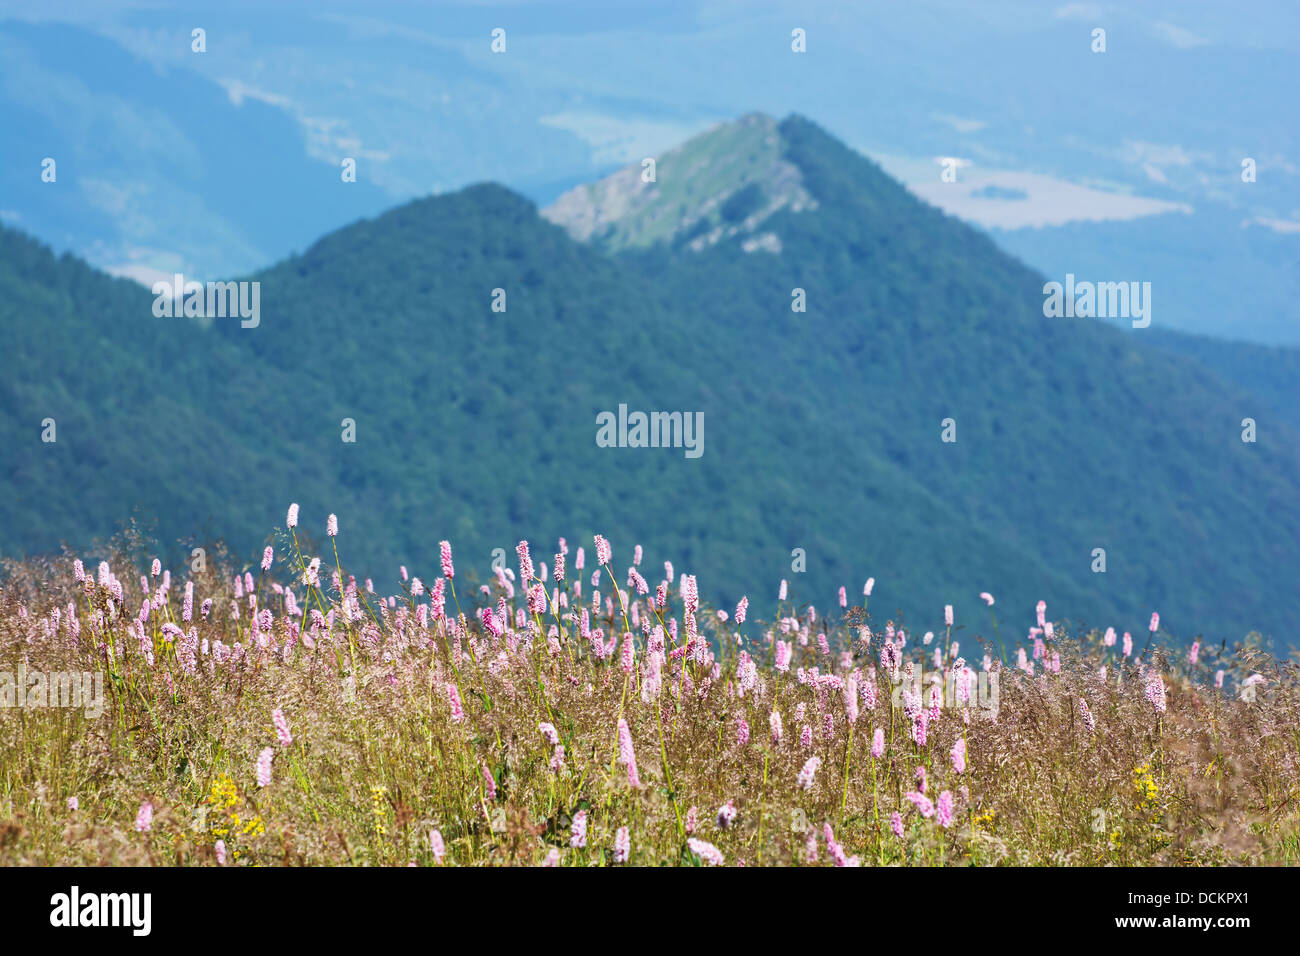 Common bistort (Persicaria bistorta) growing in the mountains. Stock Photo